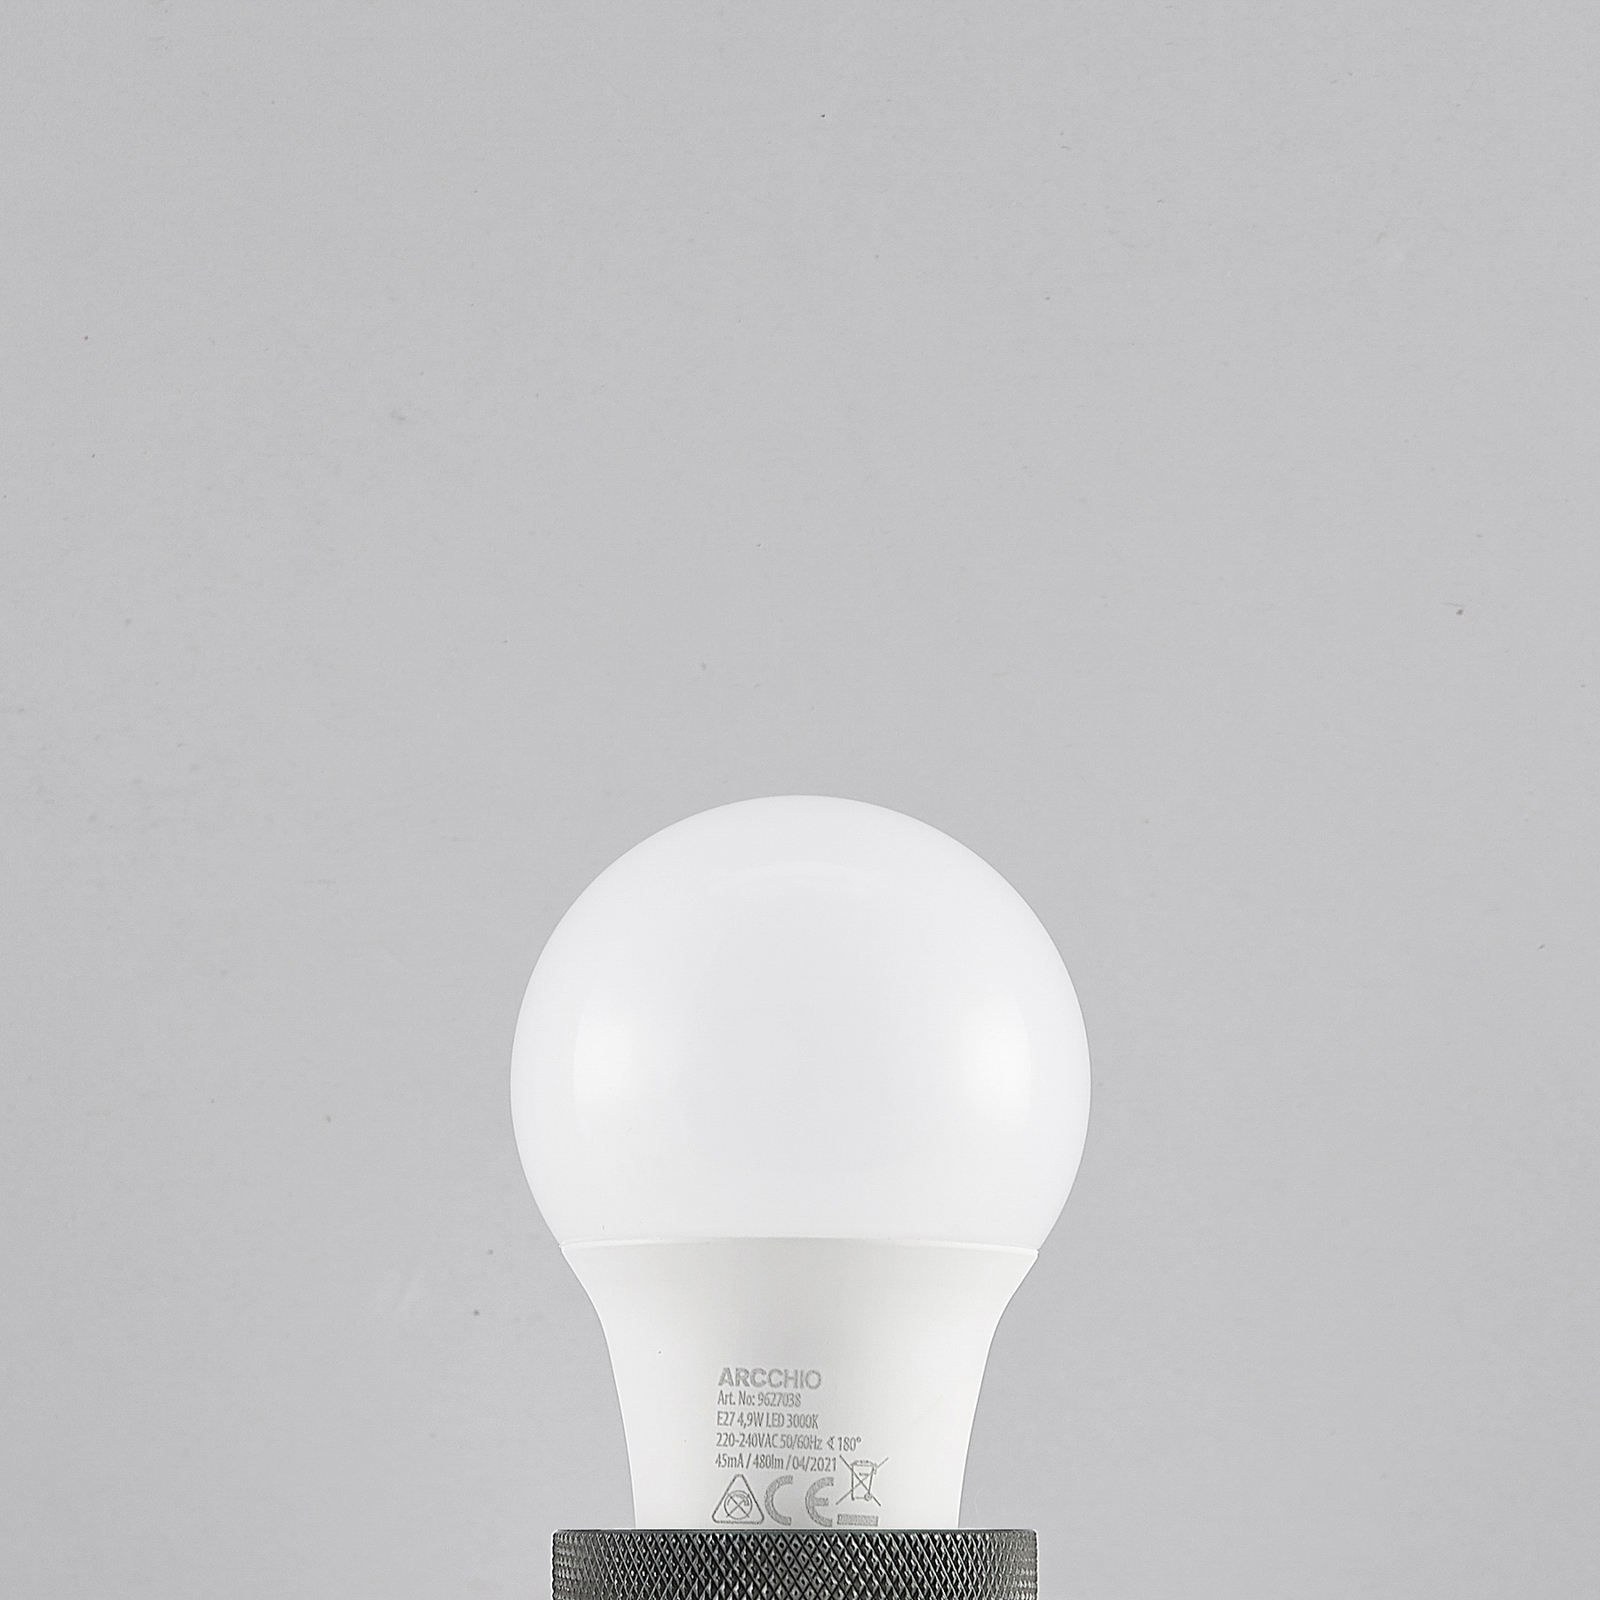 LED bulb E27 A60 4.9 W 3,000 K opal 10-pack